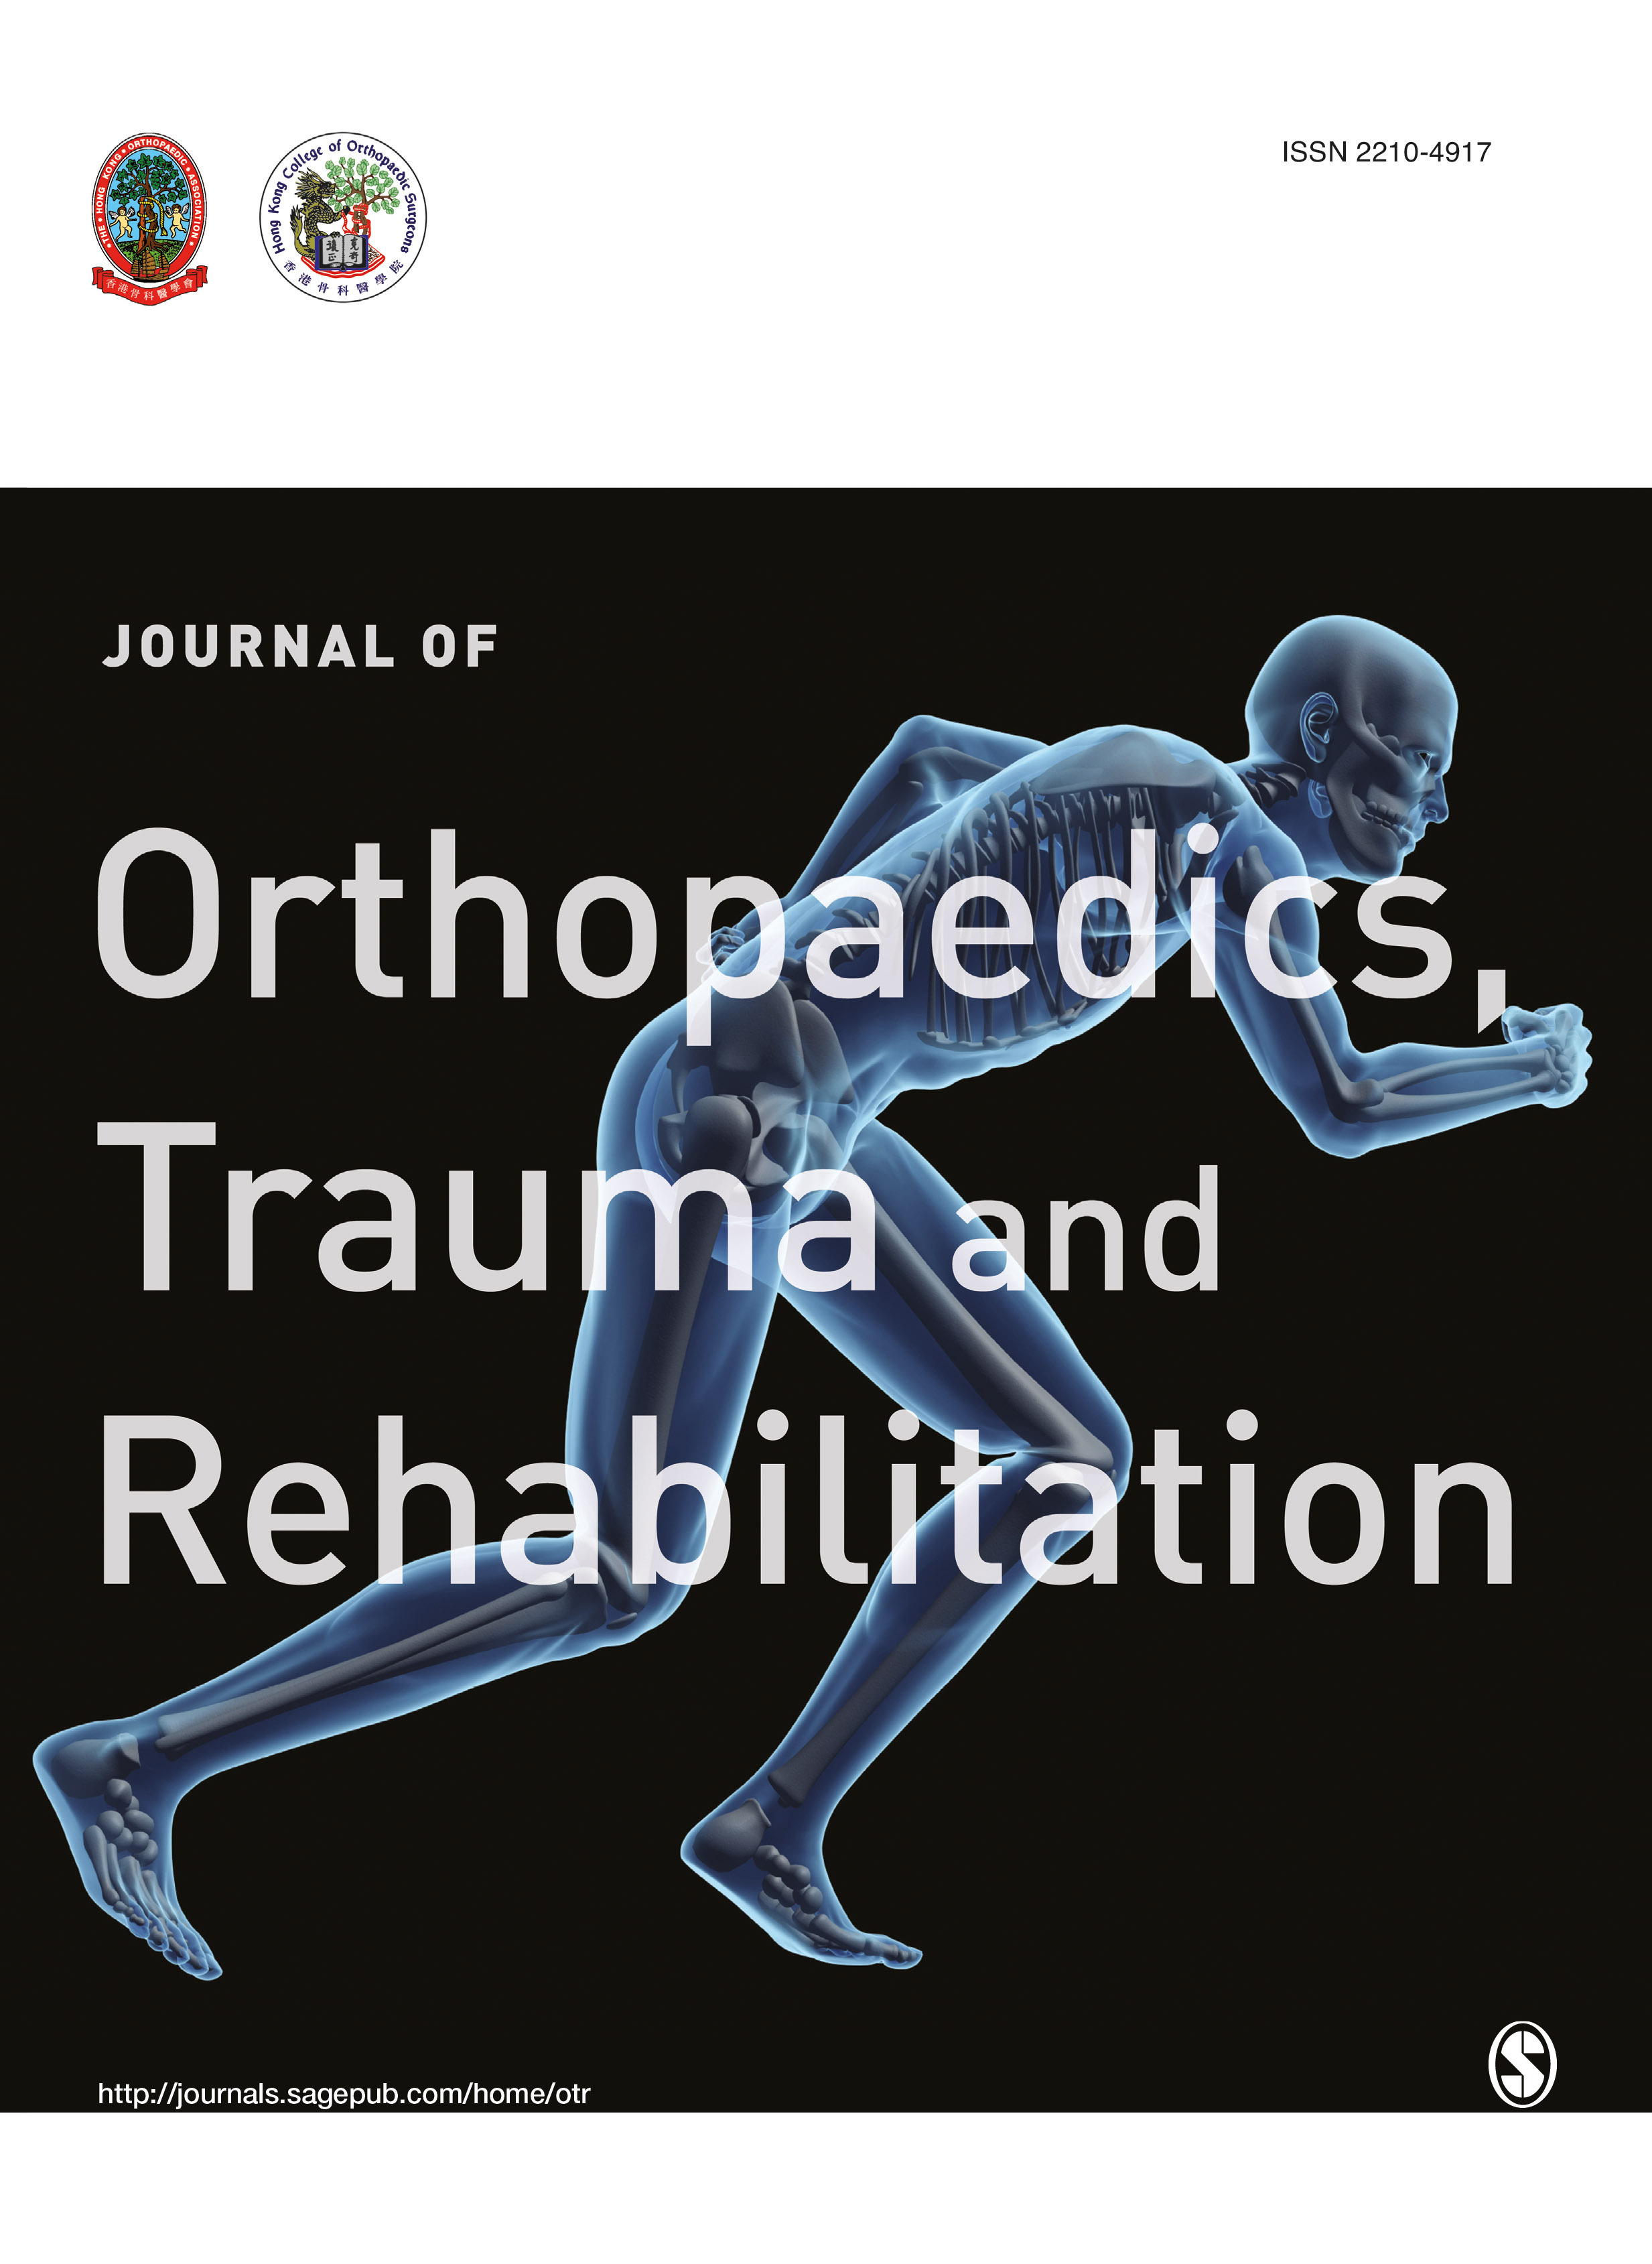  Journal of Orthopaedics, Trauma and Rehabilitation